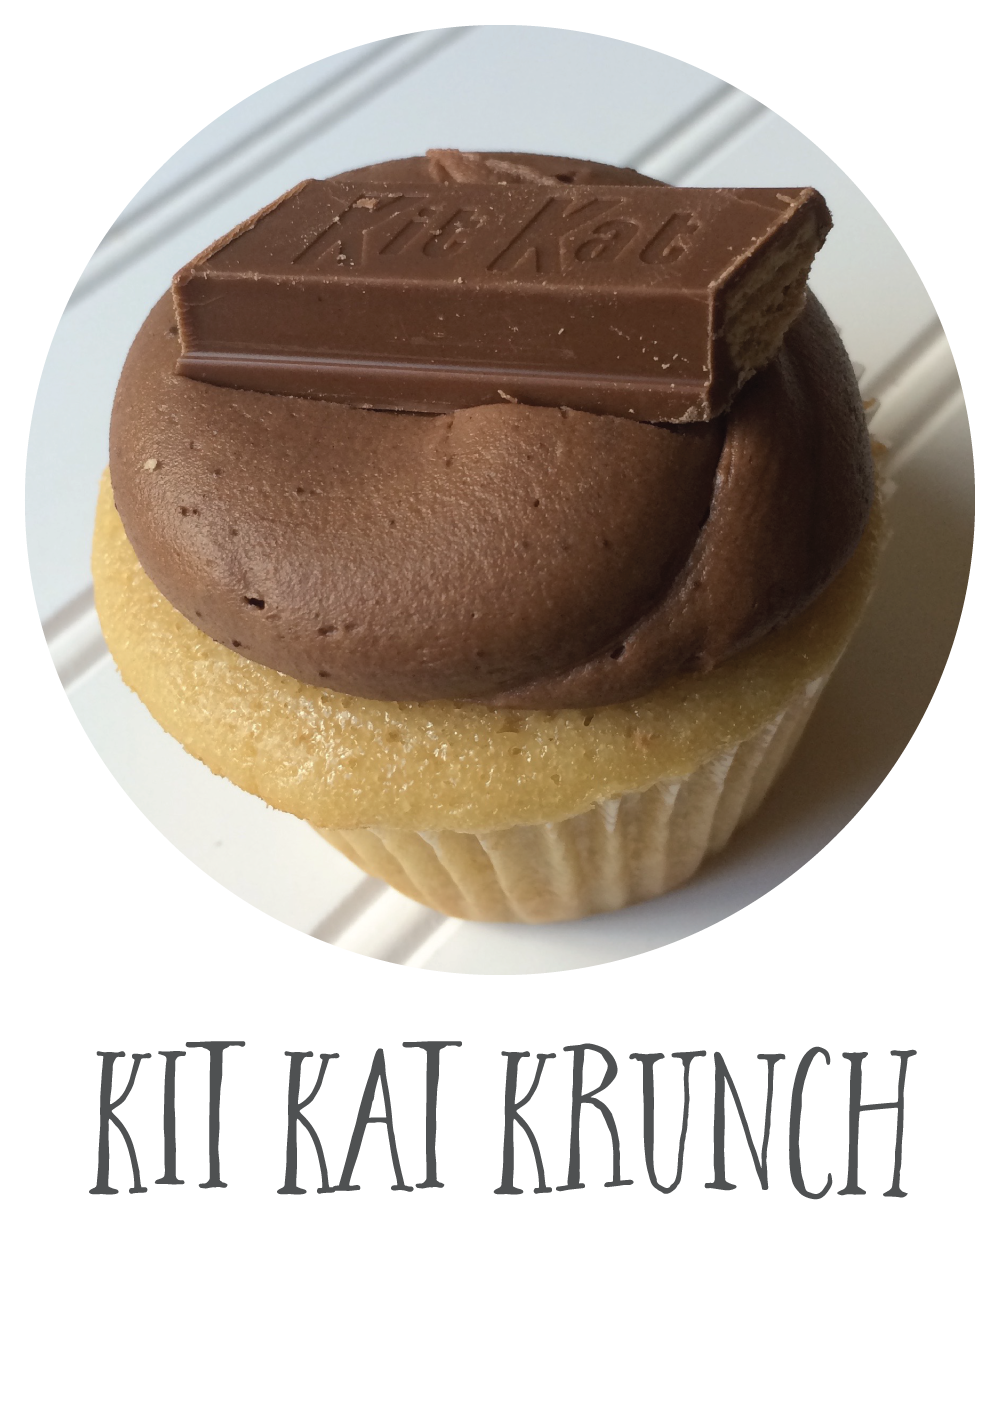 Kit-Kat-Krunch.png